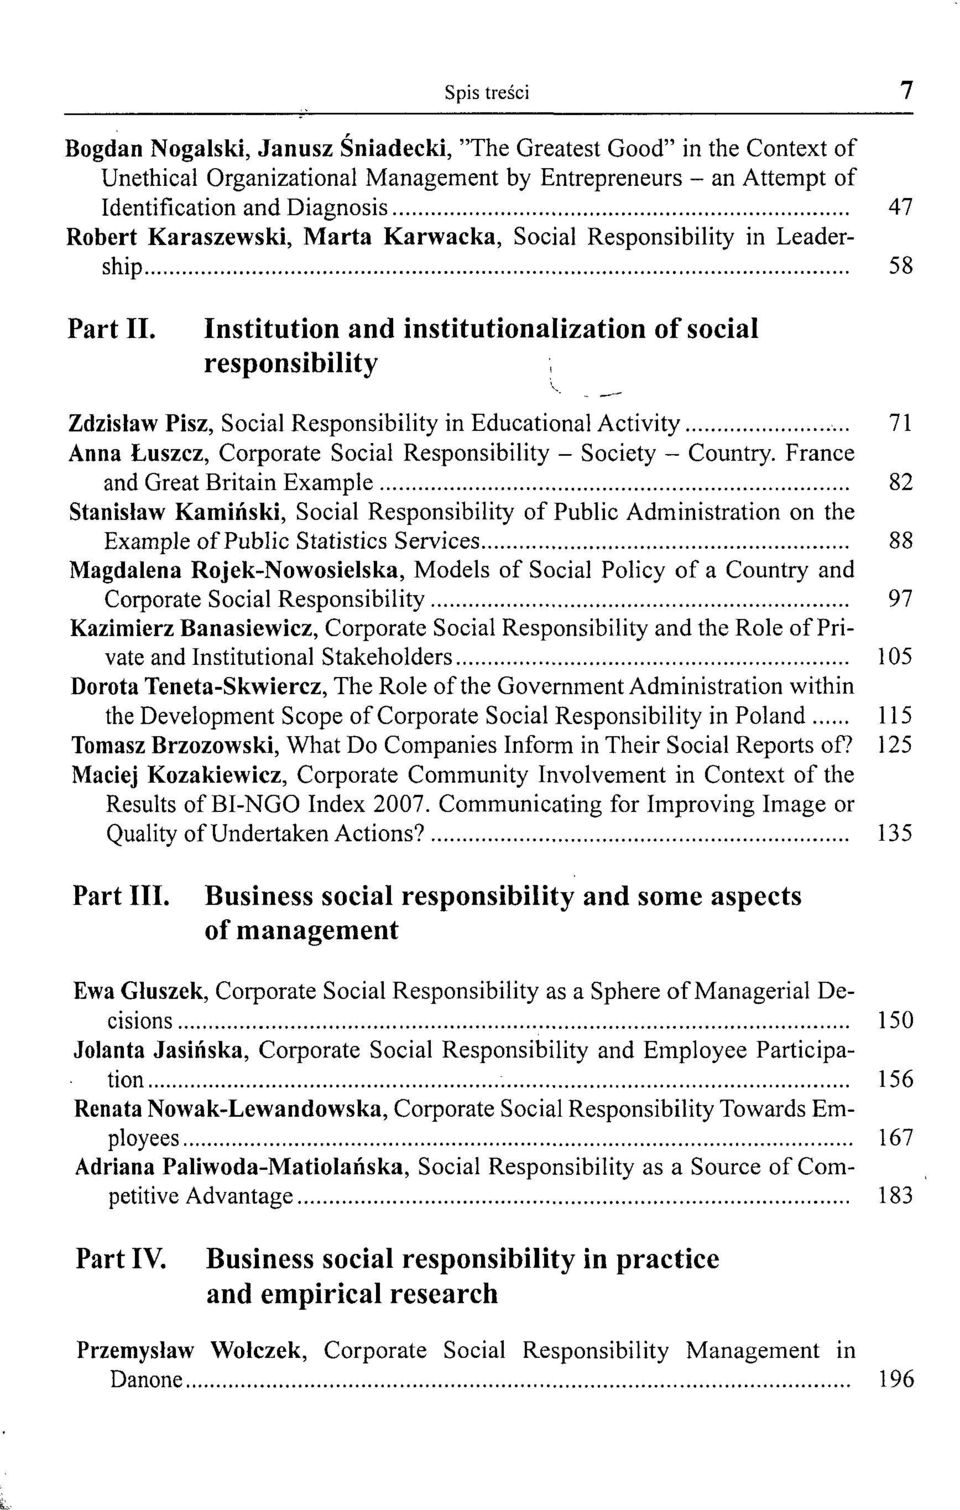 Institution and institutionalization of social responsibility Zdzisław Pisz, Social Responsibility in Educational Activity 71 Anna Łuszcz, Corporate Social Responsibility - Society - Country.